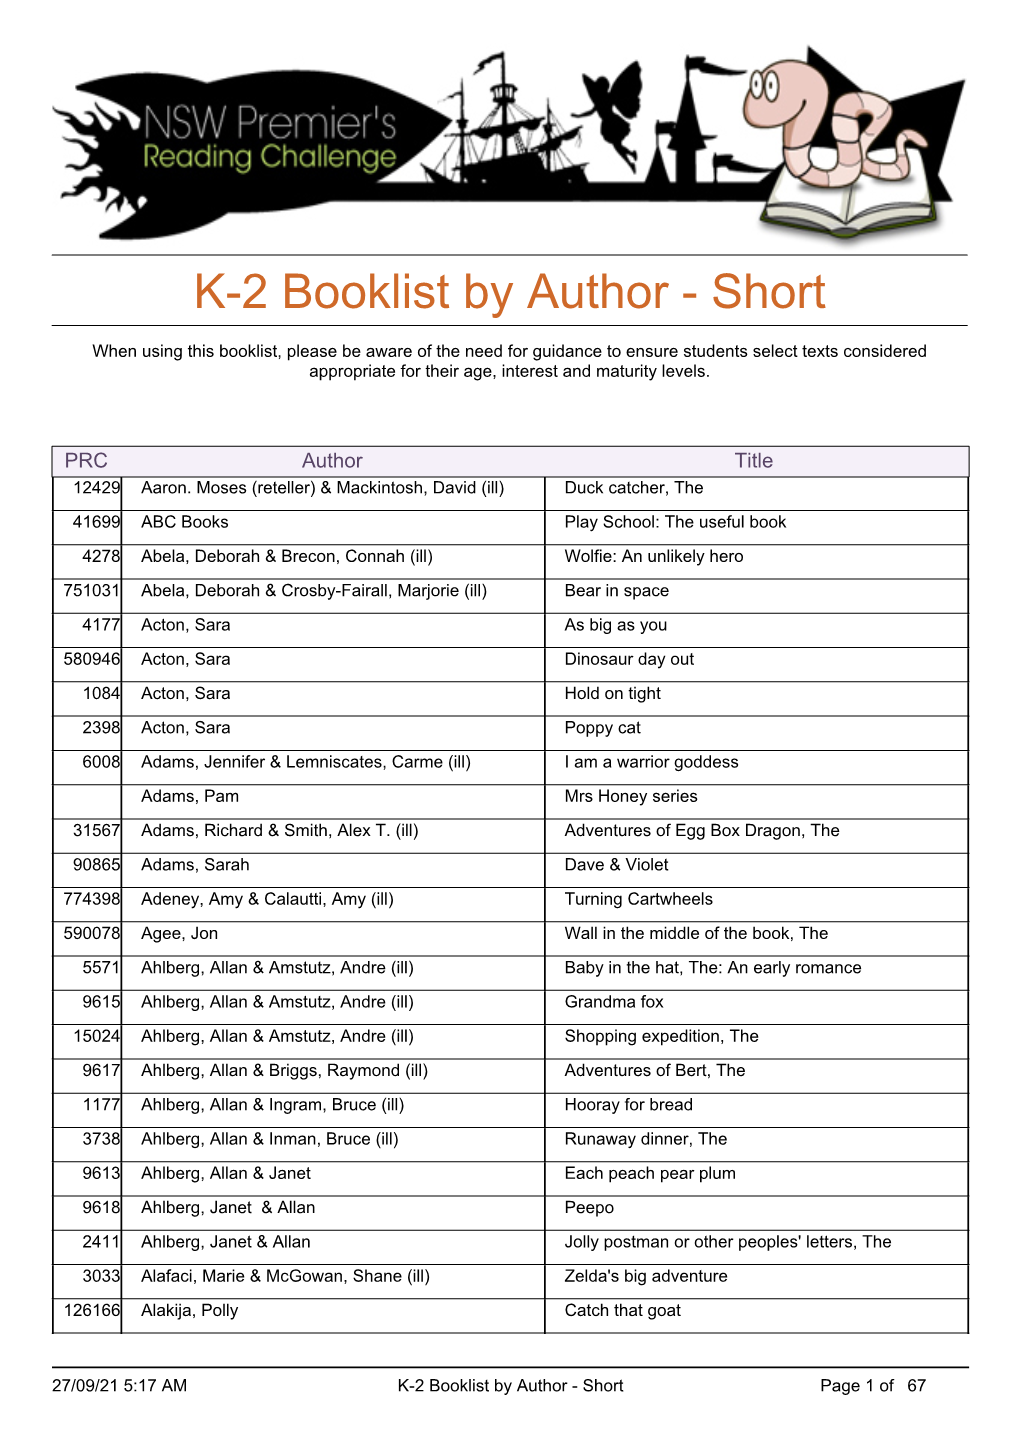 K-2 Booklist by Author - Short